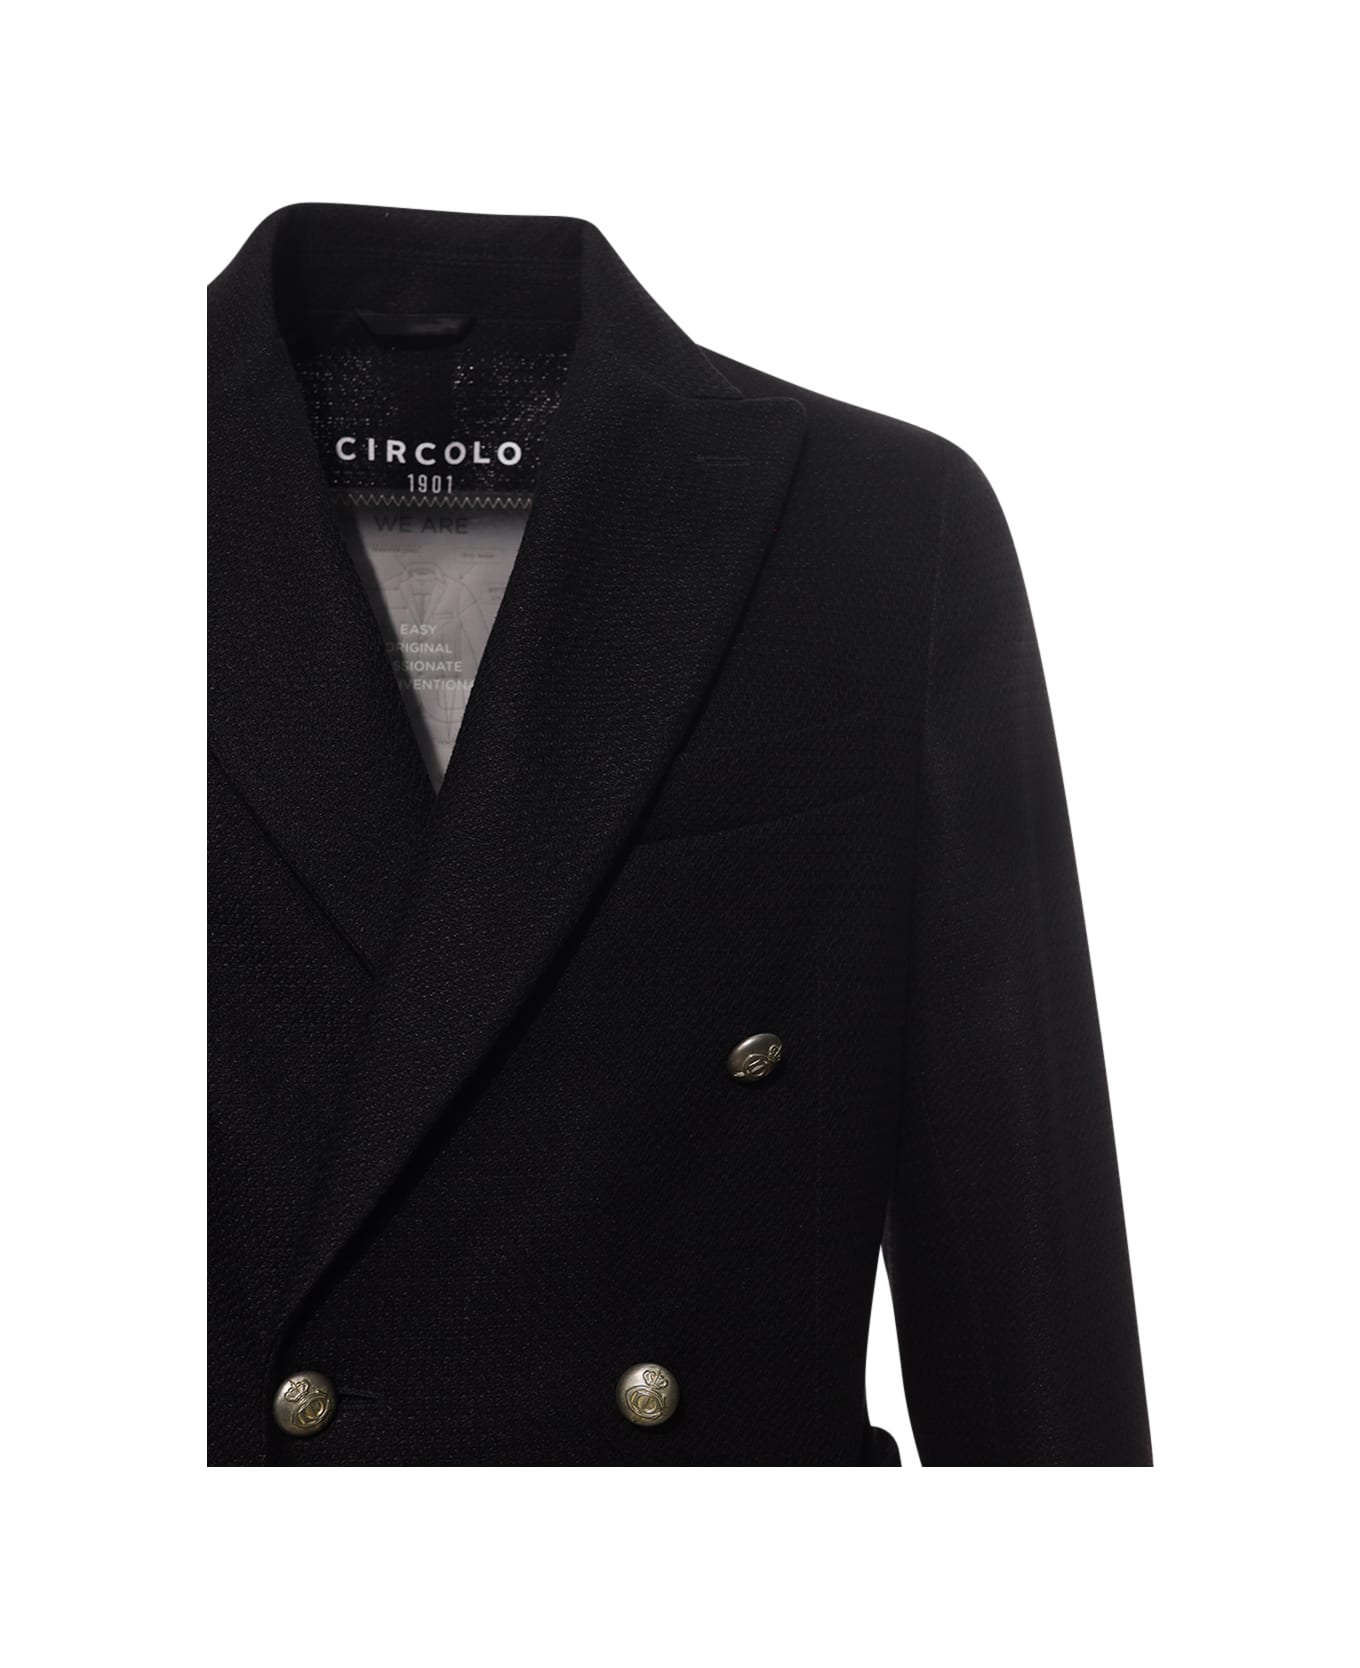 Circolo 1901 Double-breasted Jacket Circolo - Black